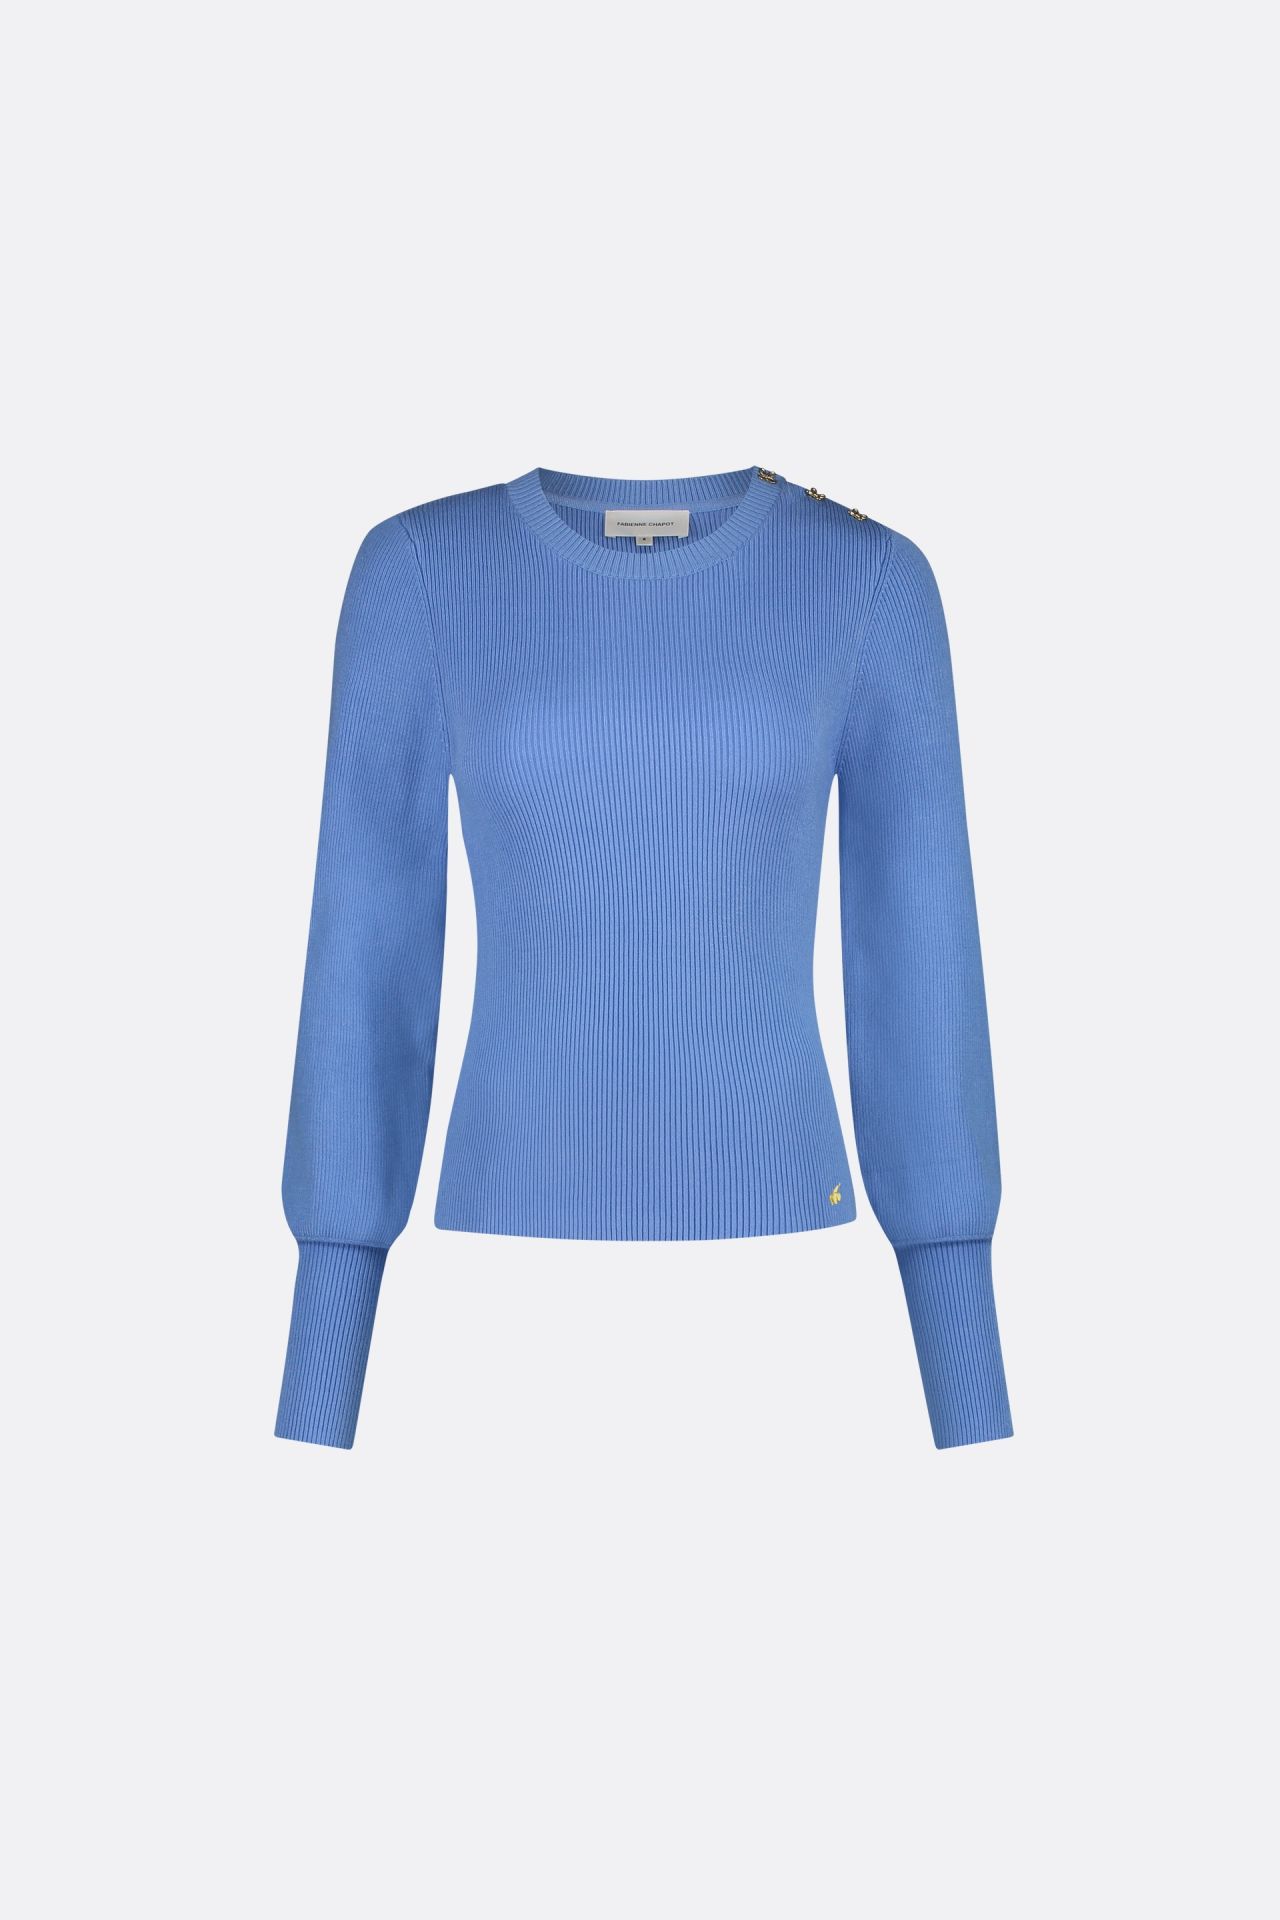 Blauwe dames pullover Fabienne Chapot - Lillian pullover